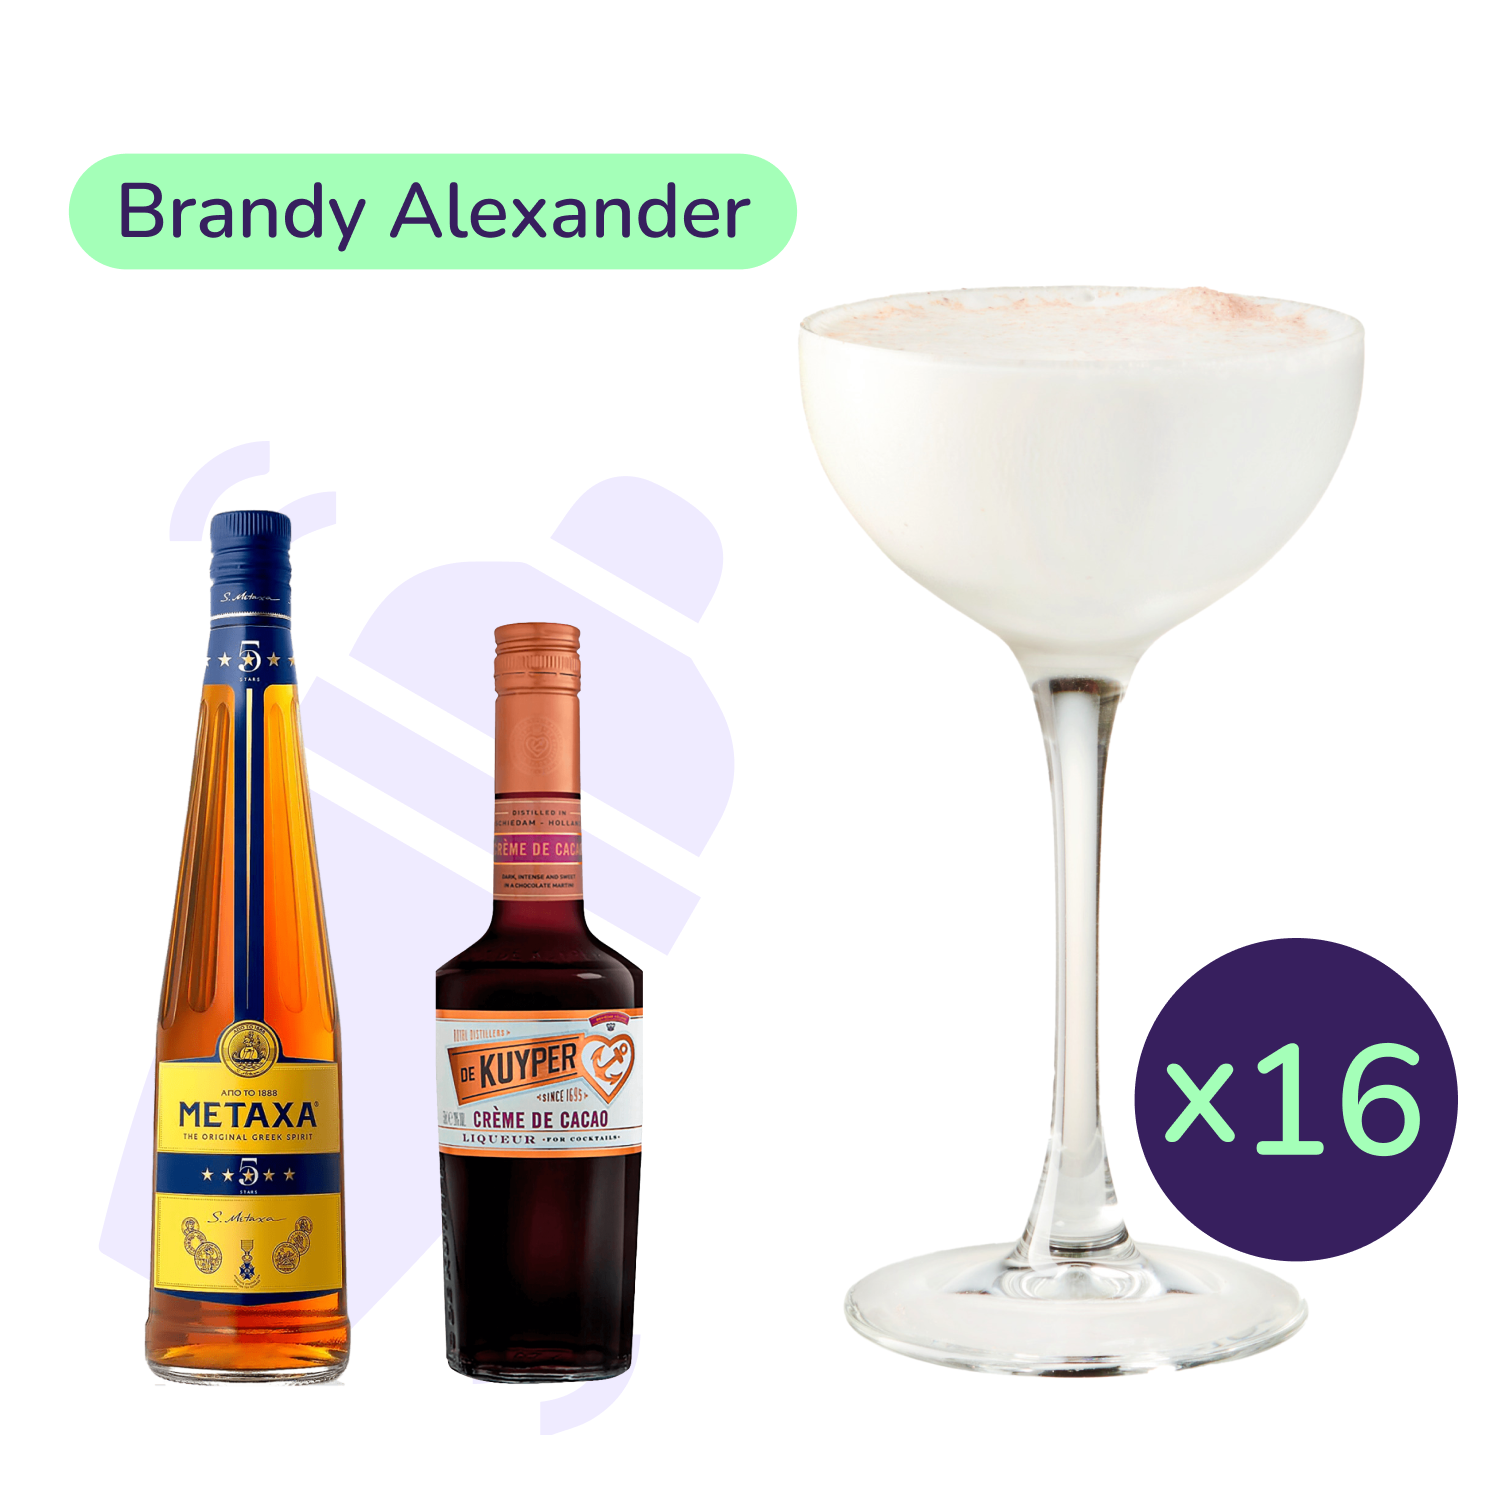 Коктейль Brandy Alexander (набор ингредиентов) х16 на основе бренди Metaxa - фото 1